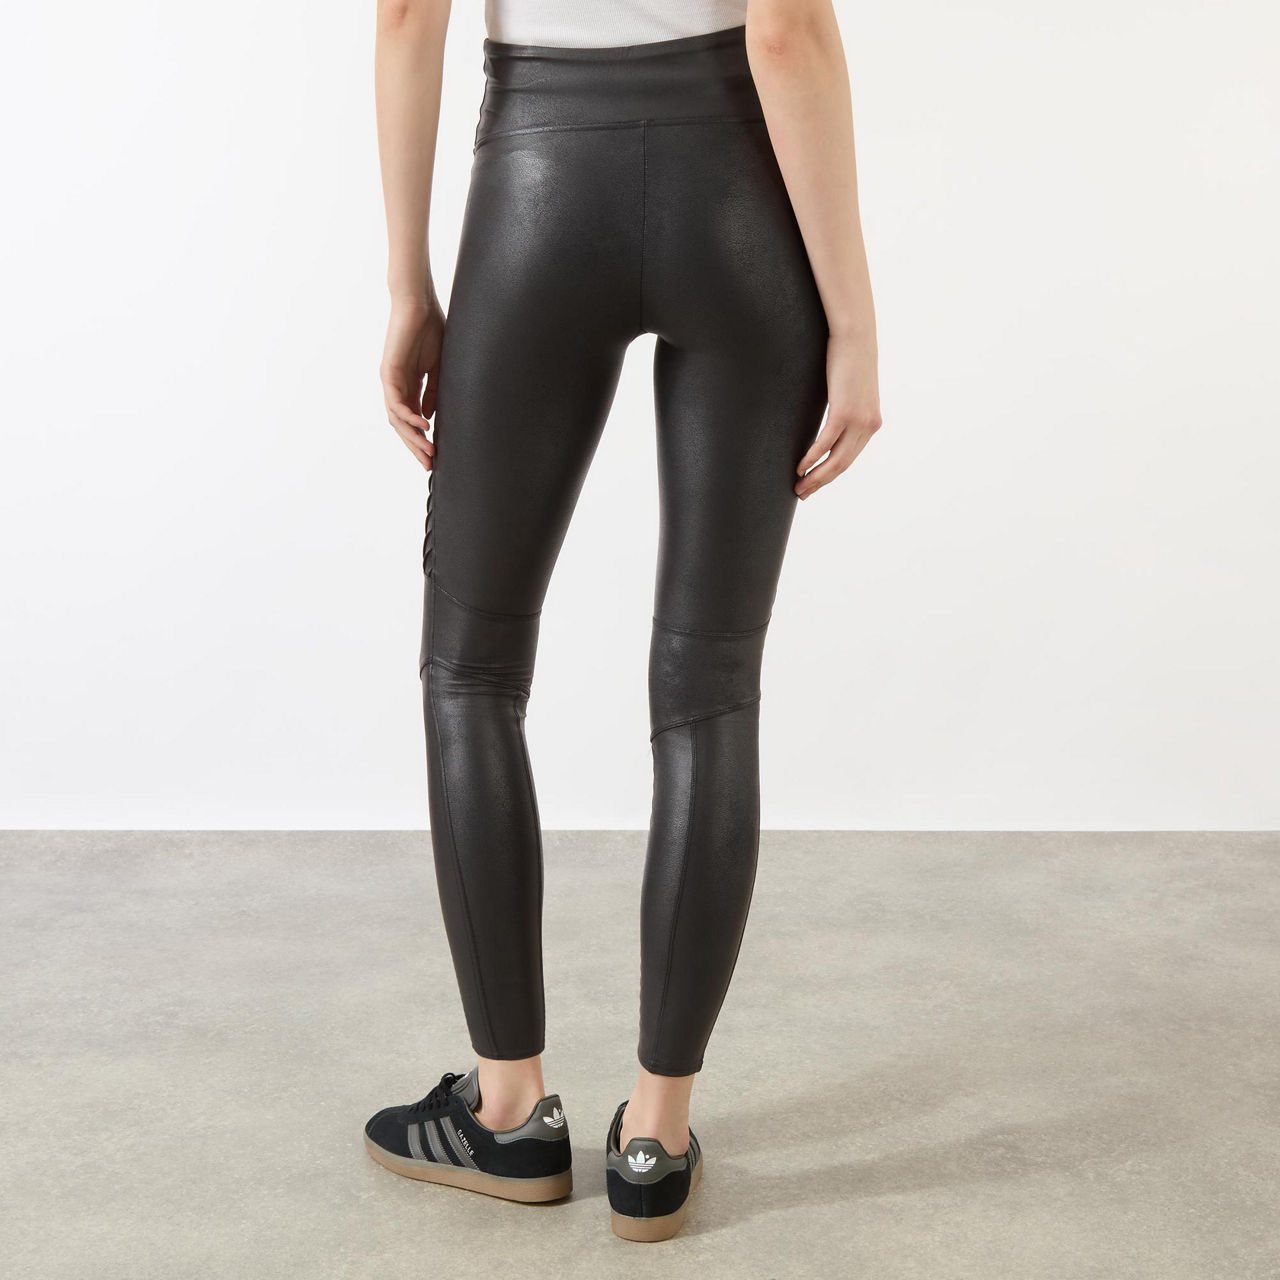 SPANX, Pants & Jumpsuits, Host Pick Spanx Size Xs Petite Faux Leather  Leggings